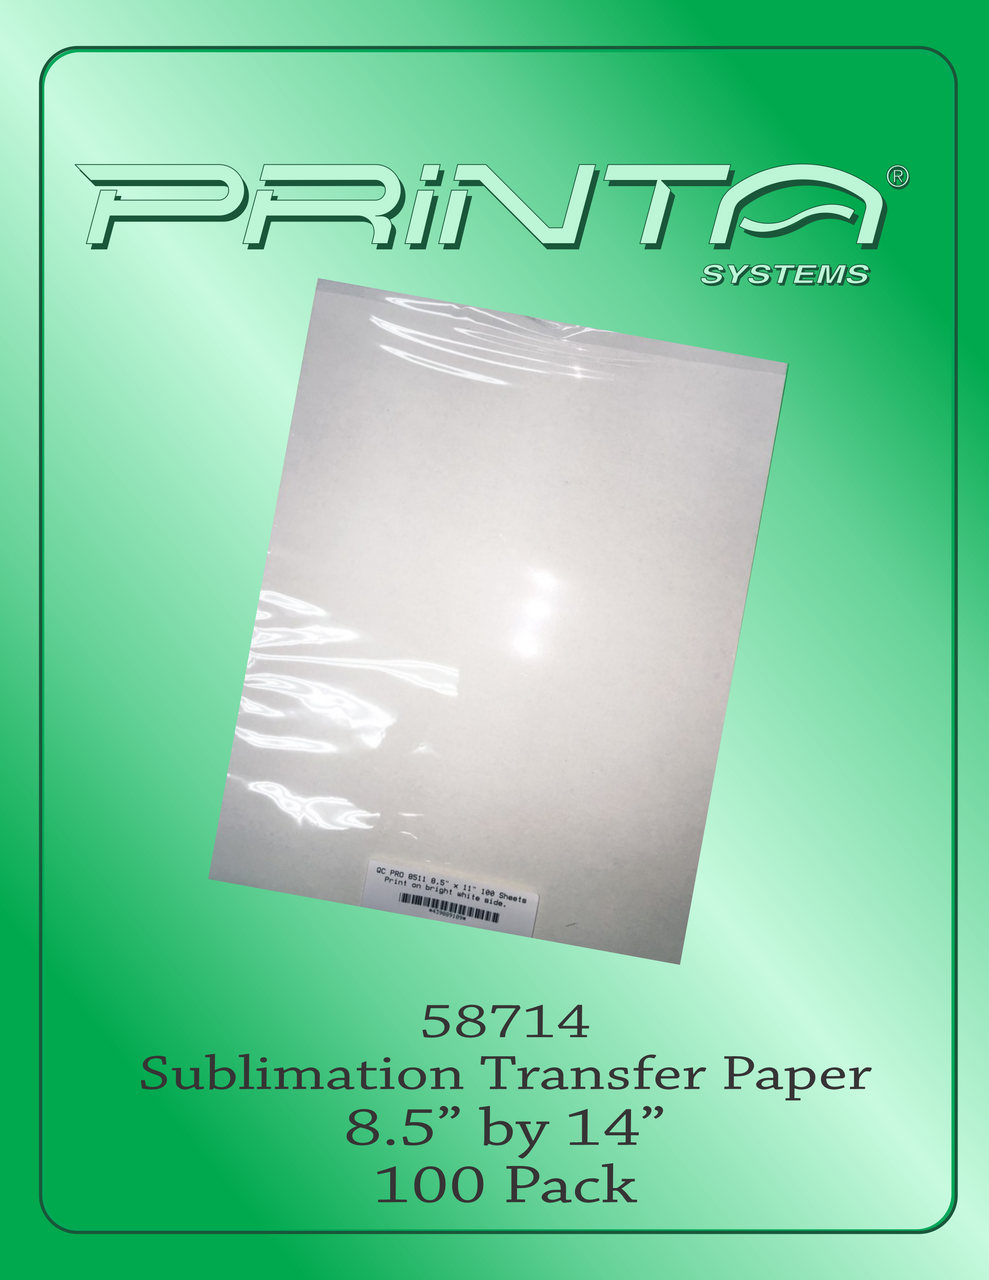 SUBLIMATION TRANSFER PAPER, 8.5 x 14 Sublimation Transfer Paper